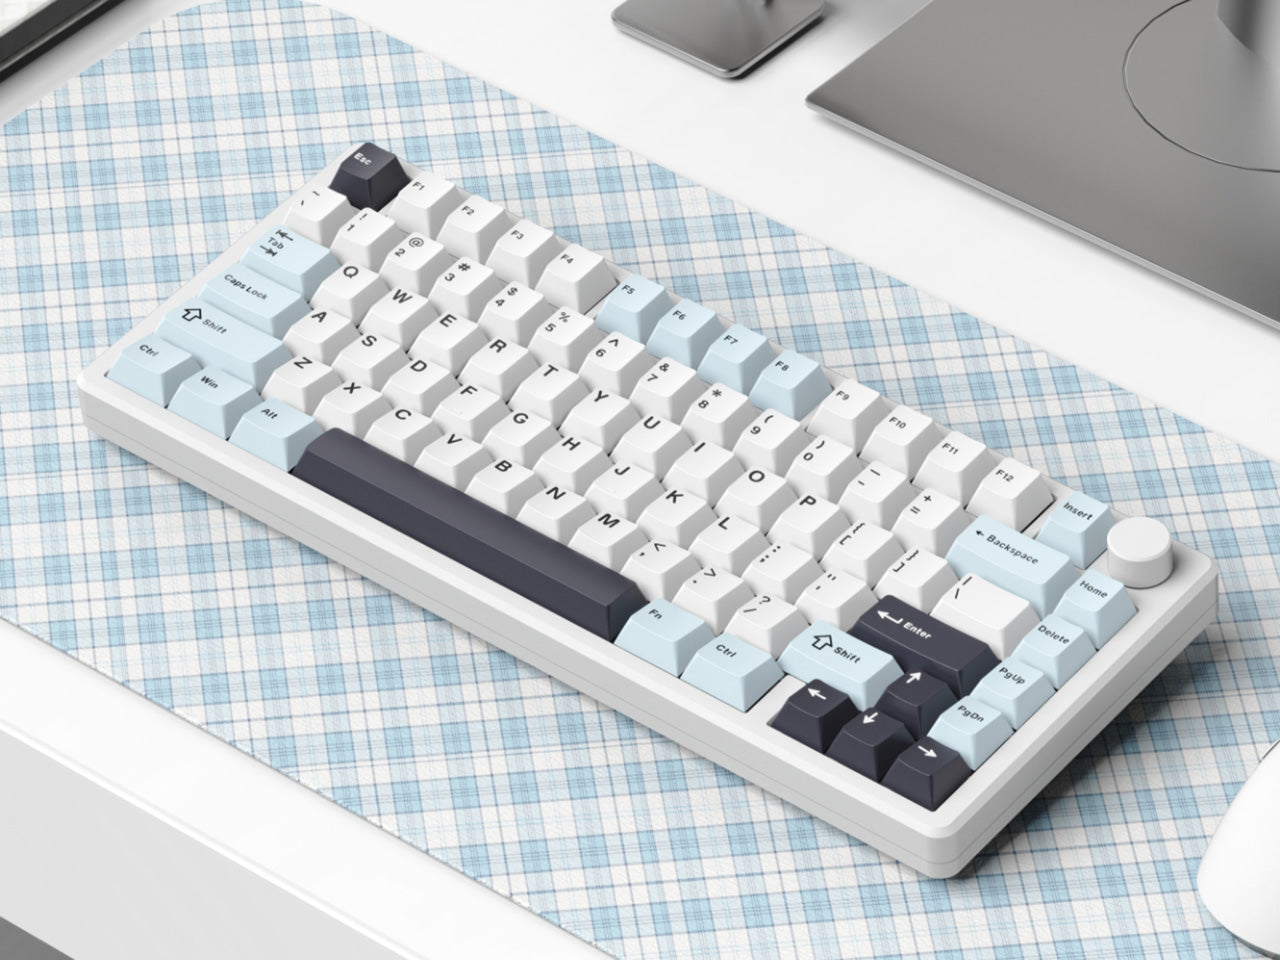 Keybay X Monka A75 Tri-mode Aluminum Keyboard - White